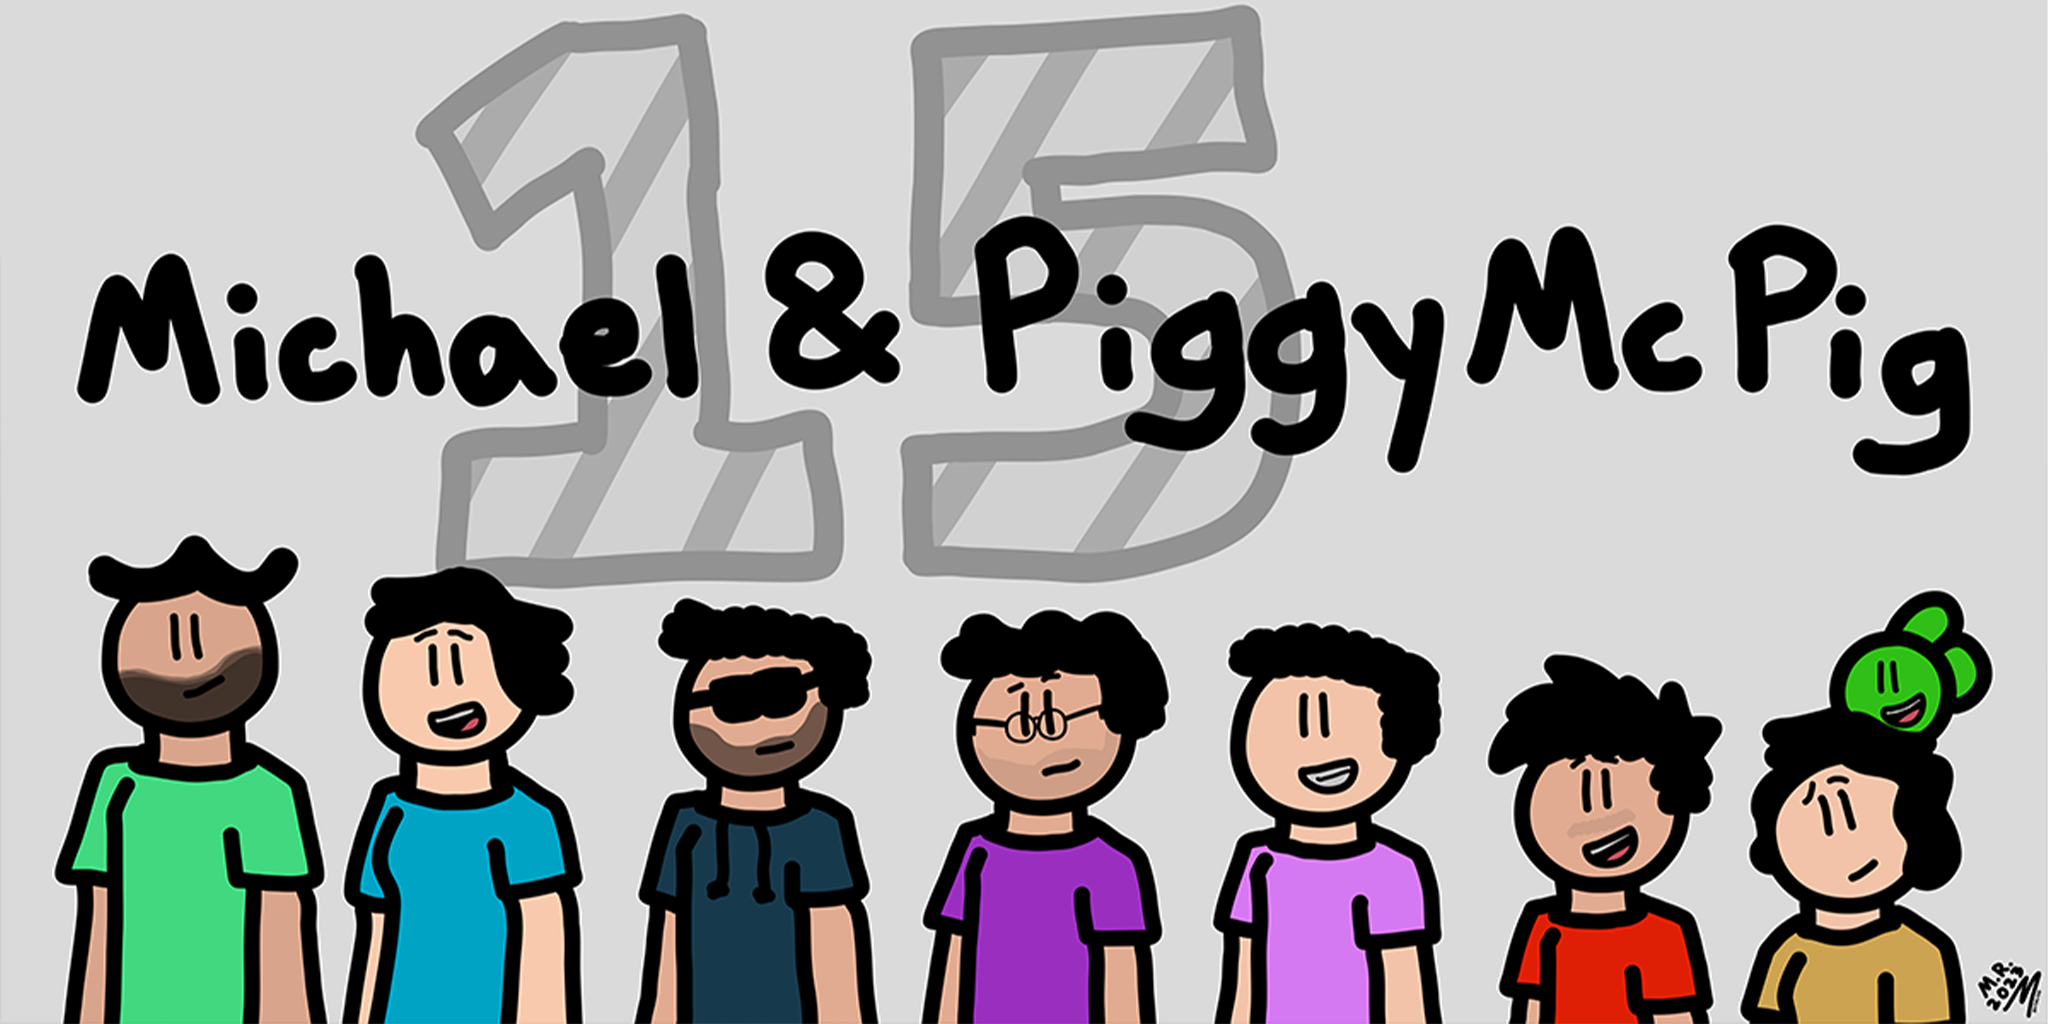 Michael & PiggyMcPig: Celebrating 15 years.